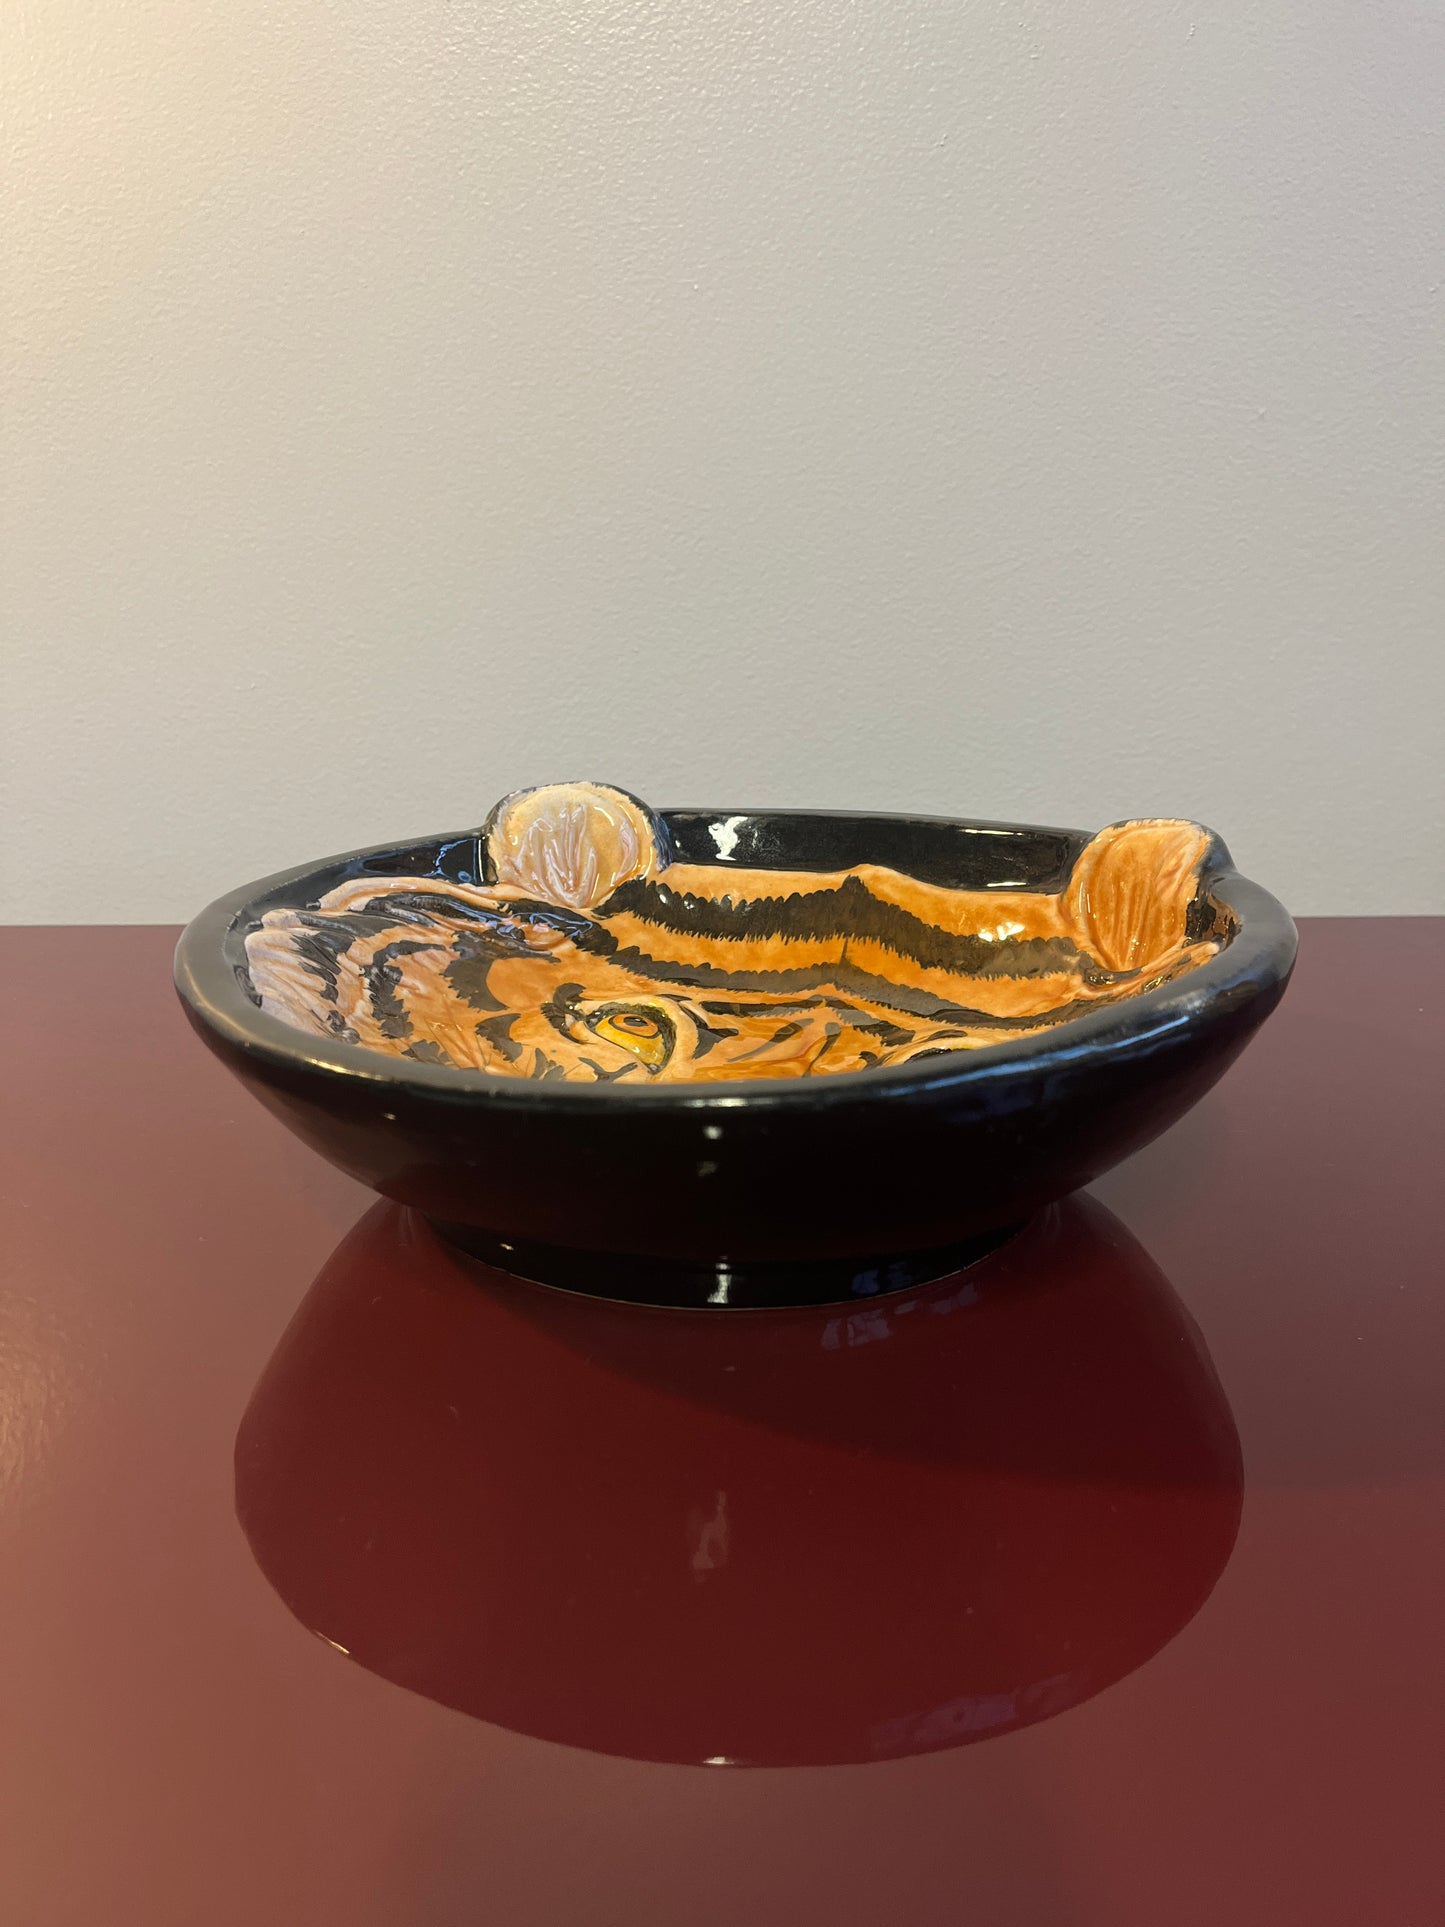 Italian Ceramic Tiger Bowl